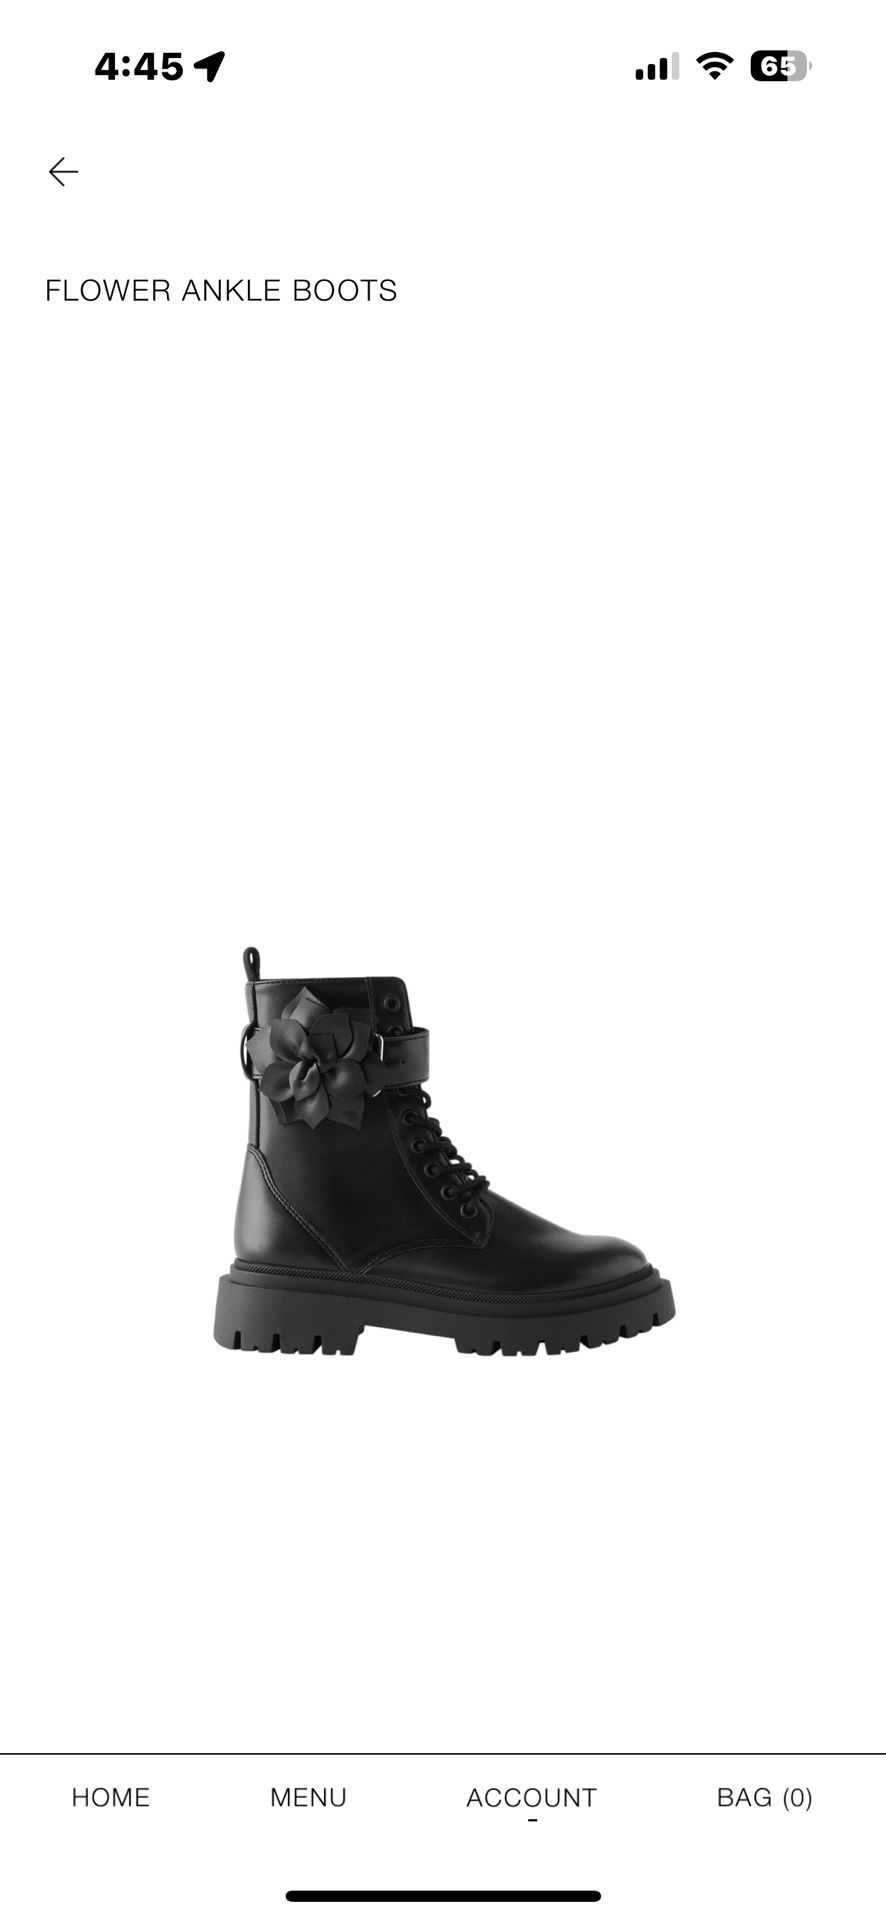 Zara Combat boots